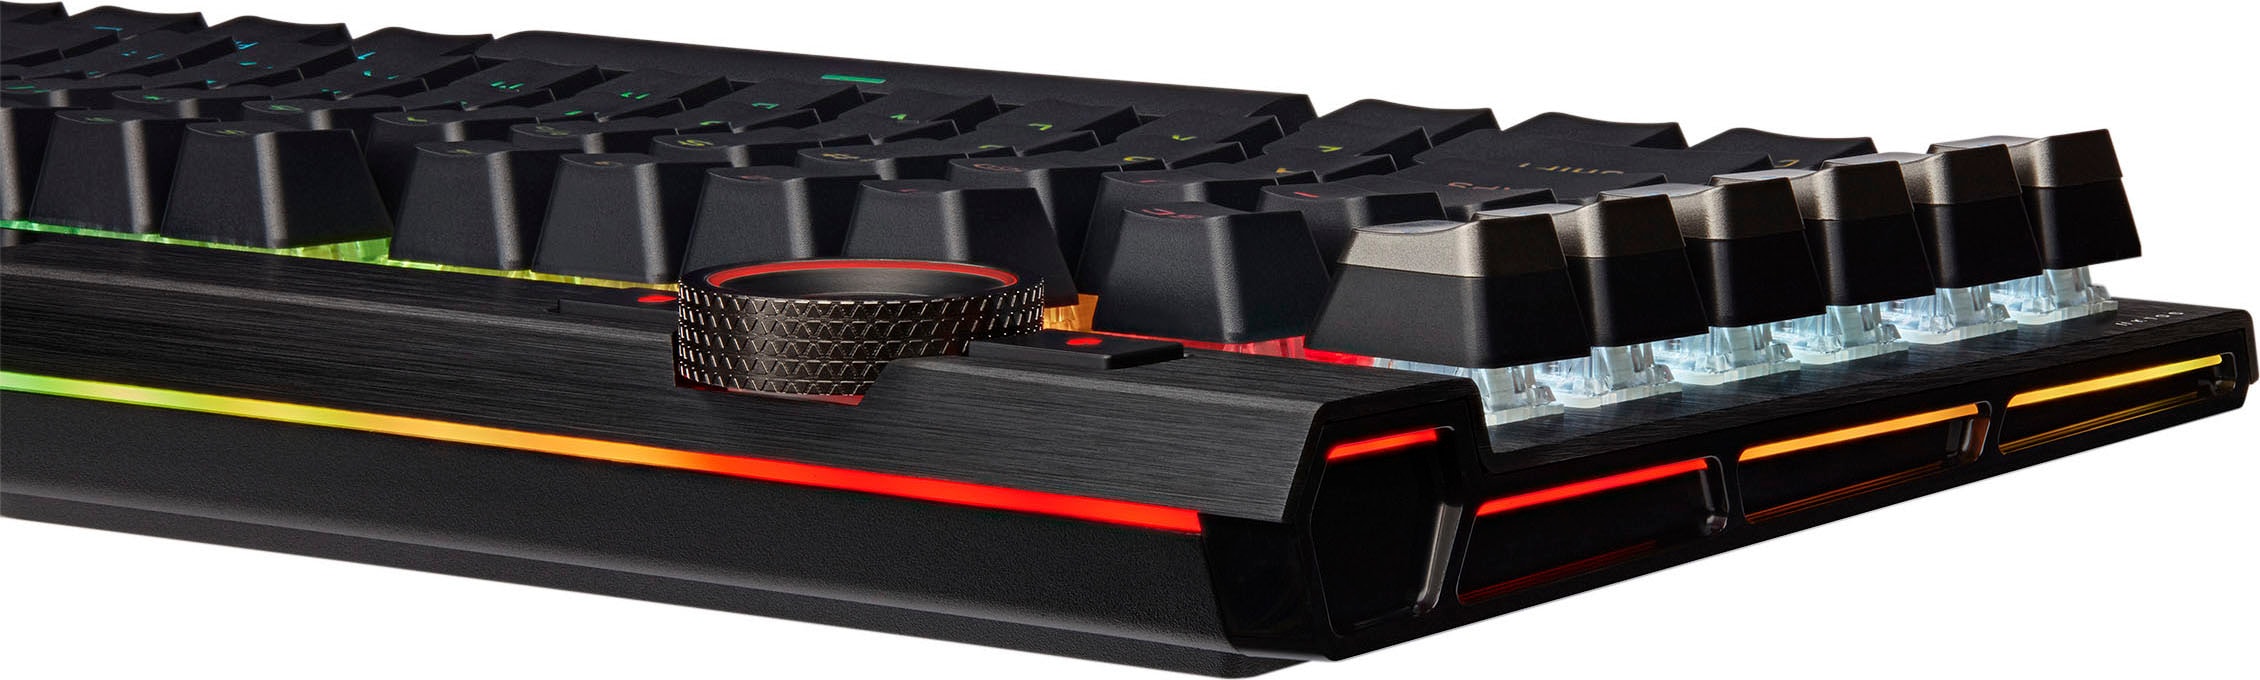 Corsair Gaming-Tastatur »K100 CORSAIR OPX«, (Handgelenkauflage-USB-Anschluss-Lautstärkeregler-Makro-Tasten-ausklappbare Füsse-Ziffernblock)